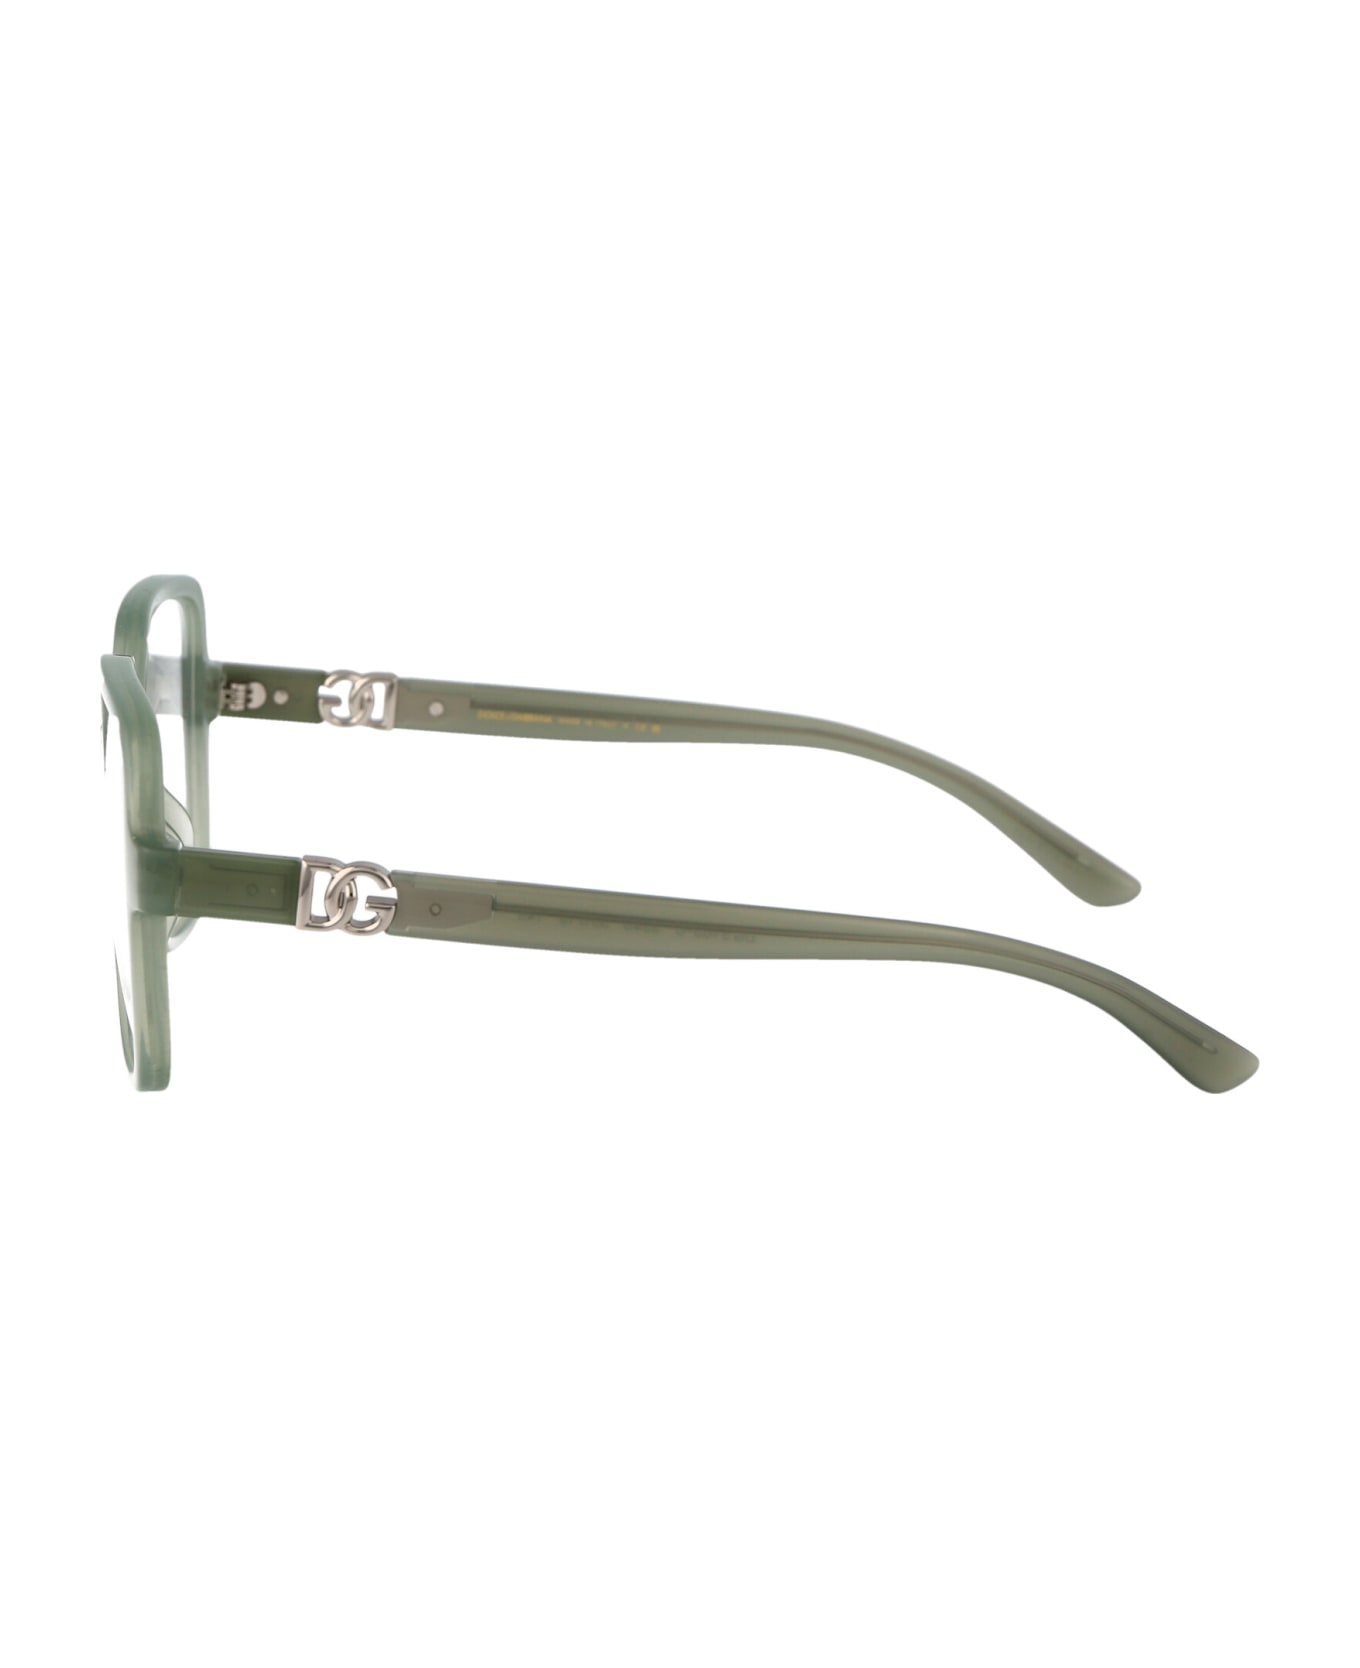 Dolce & Gabbana Eyewear 0dg5105u Glasses - 3345 Milky Green アイウェア